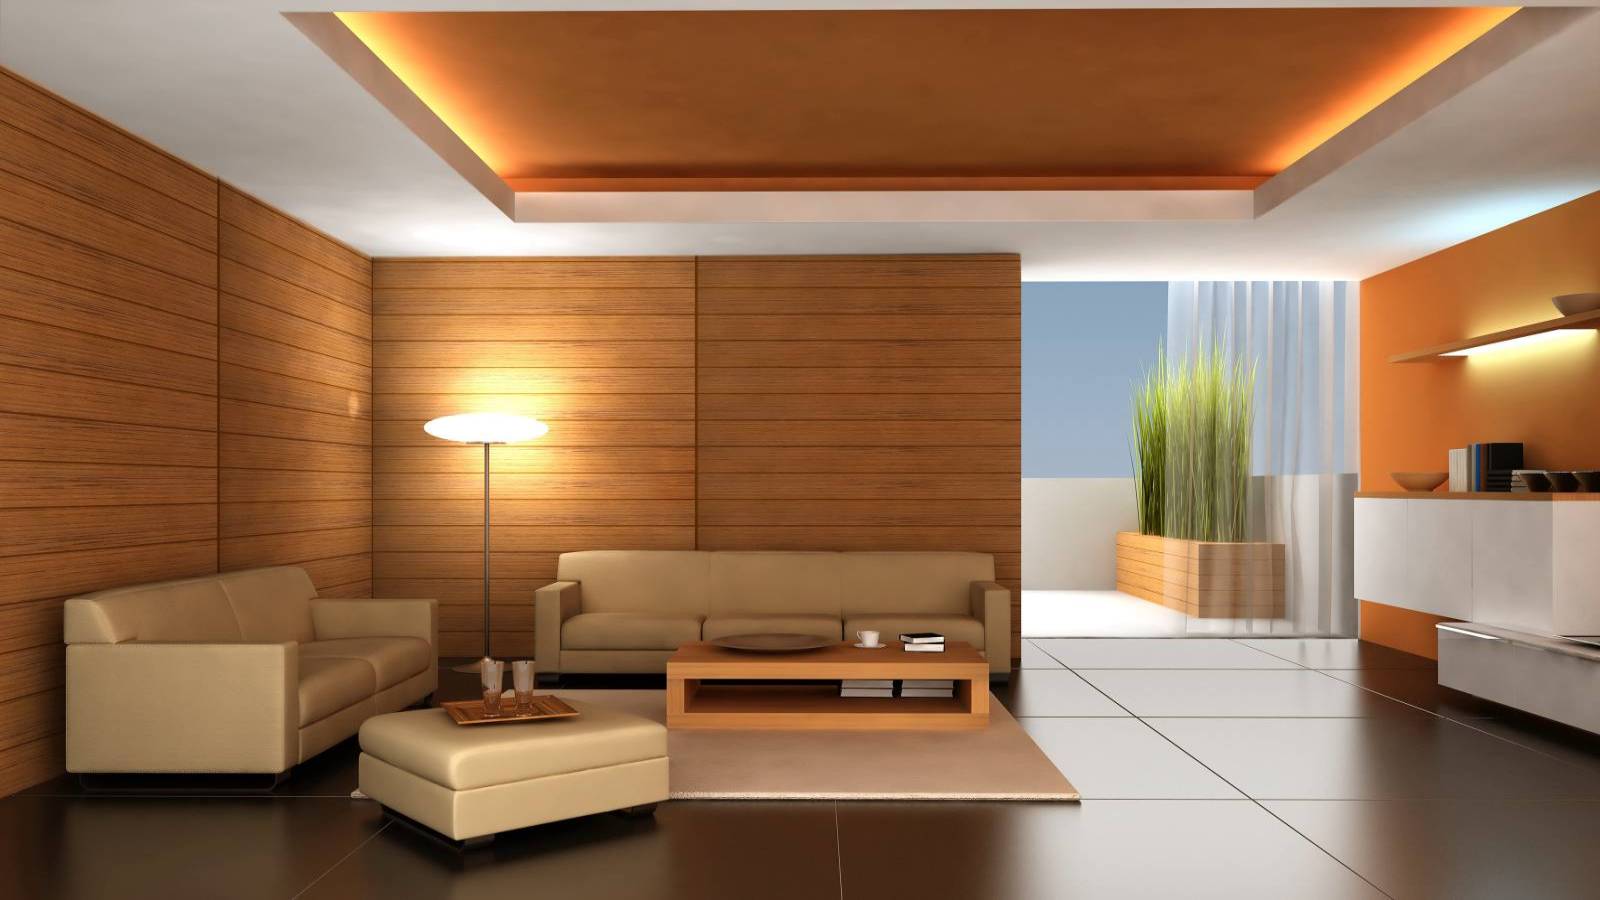 luxury living room interiors